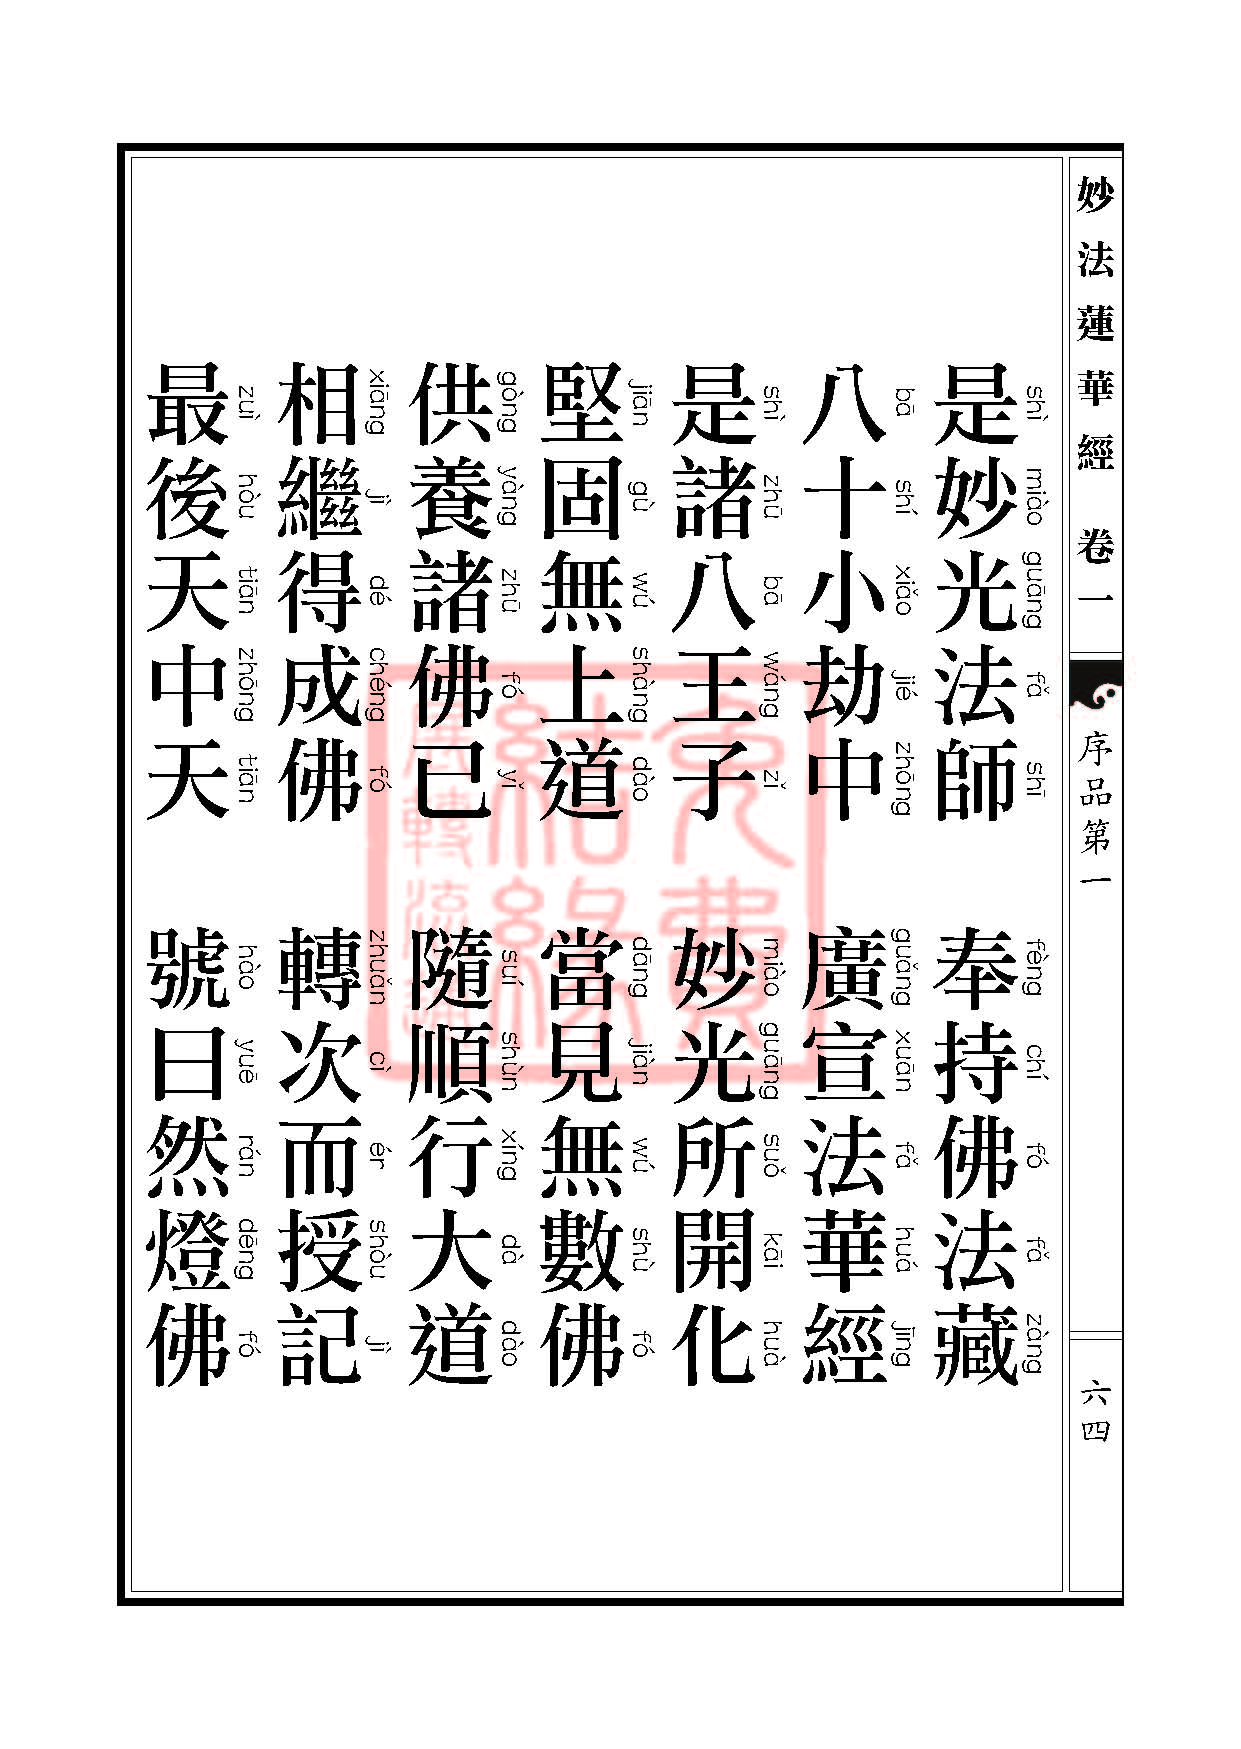 Book_FHJ_HK-A6-PY_Web_页面_064.jpg